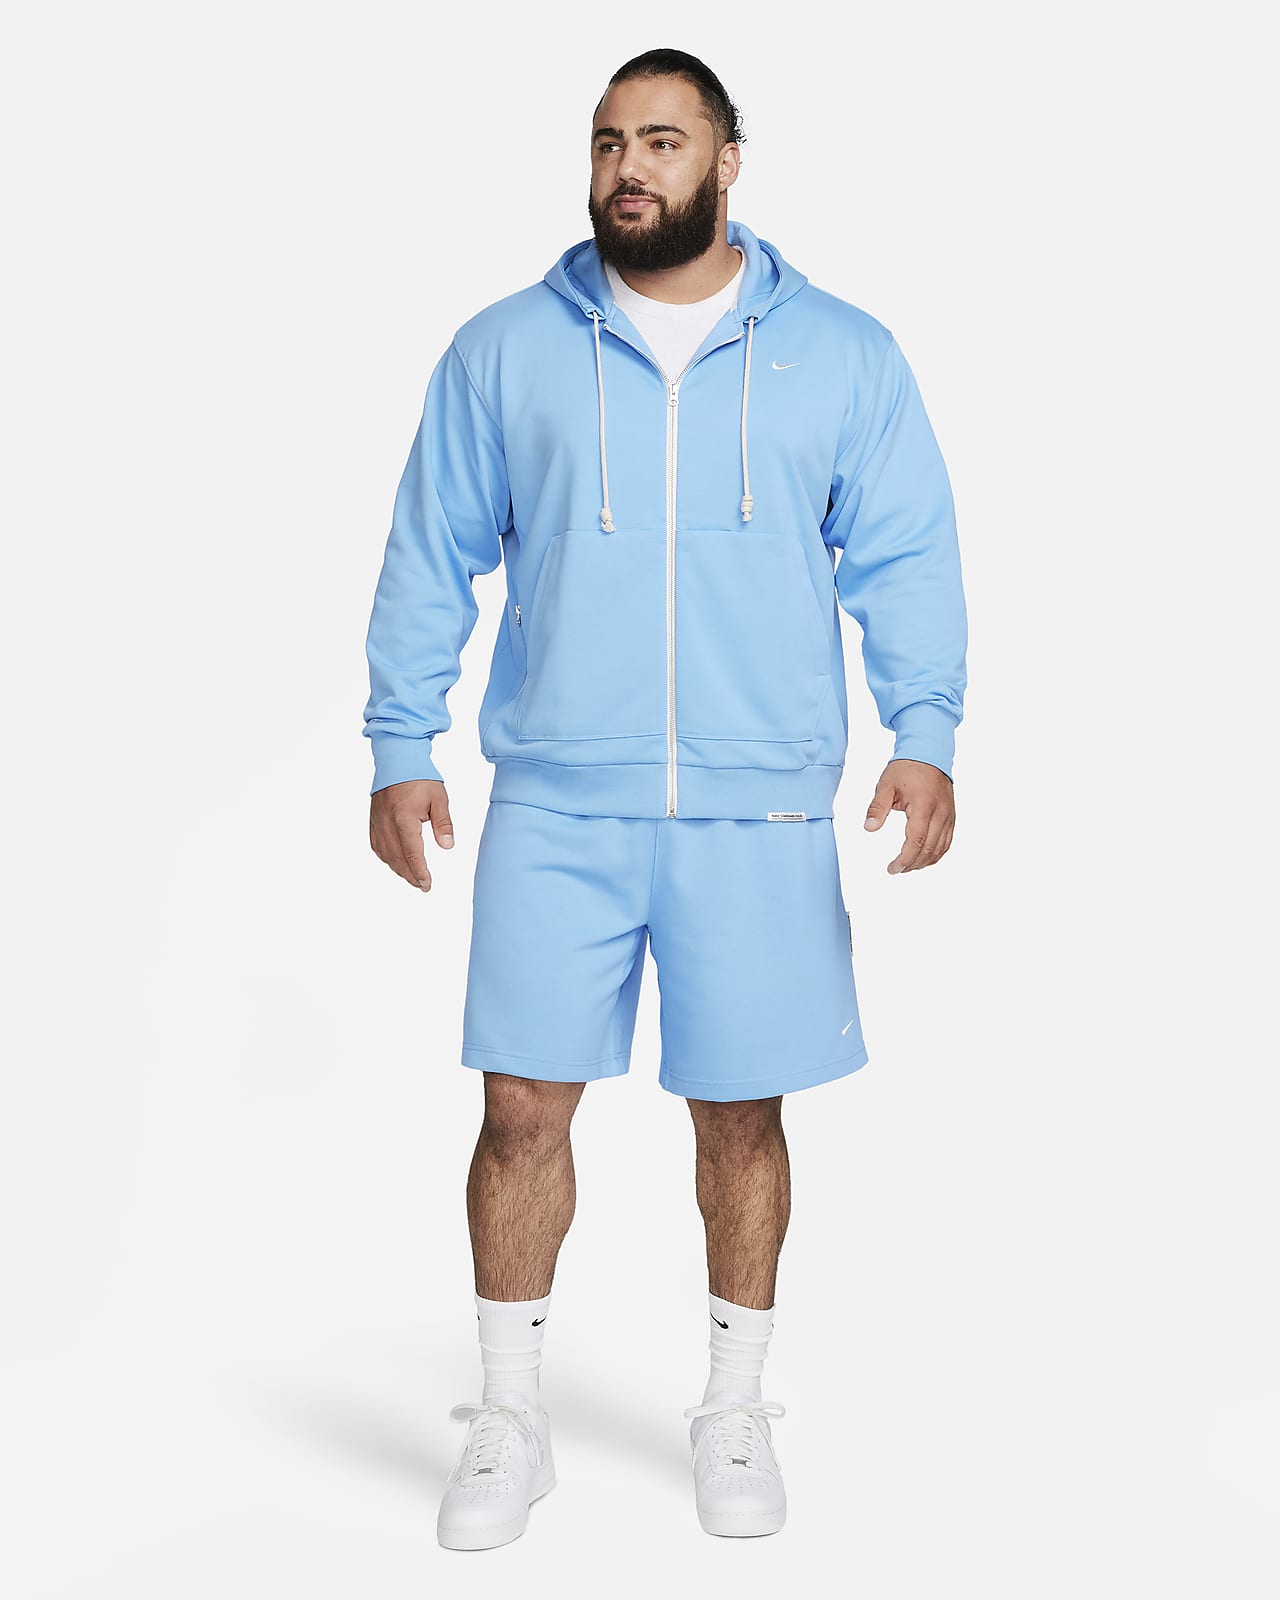 Nike Dri-Fit Standard Issue Hoodie - Men's - GBNY